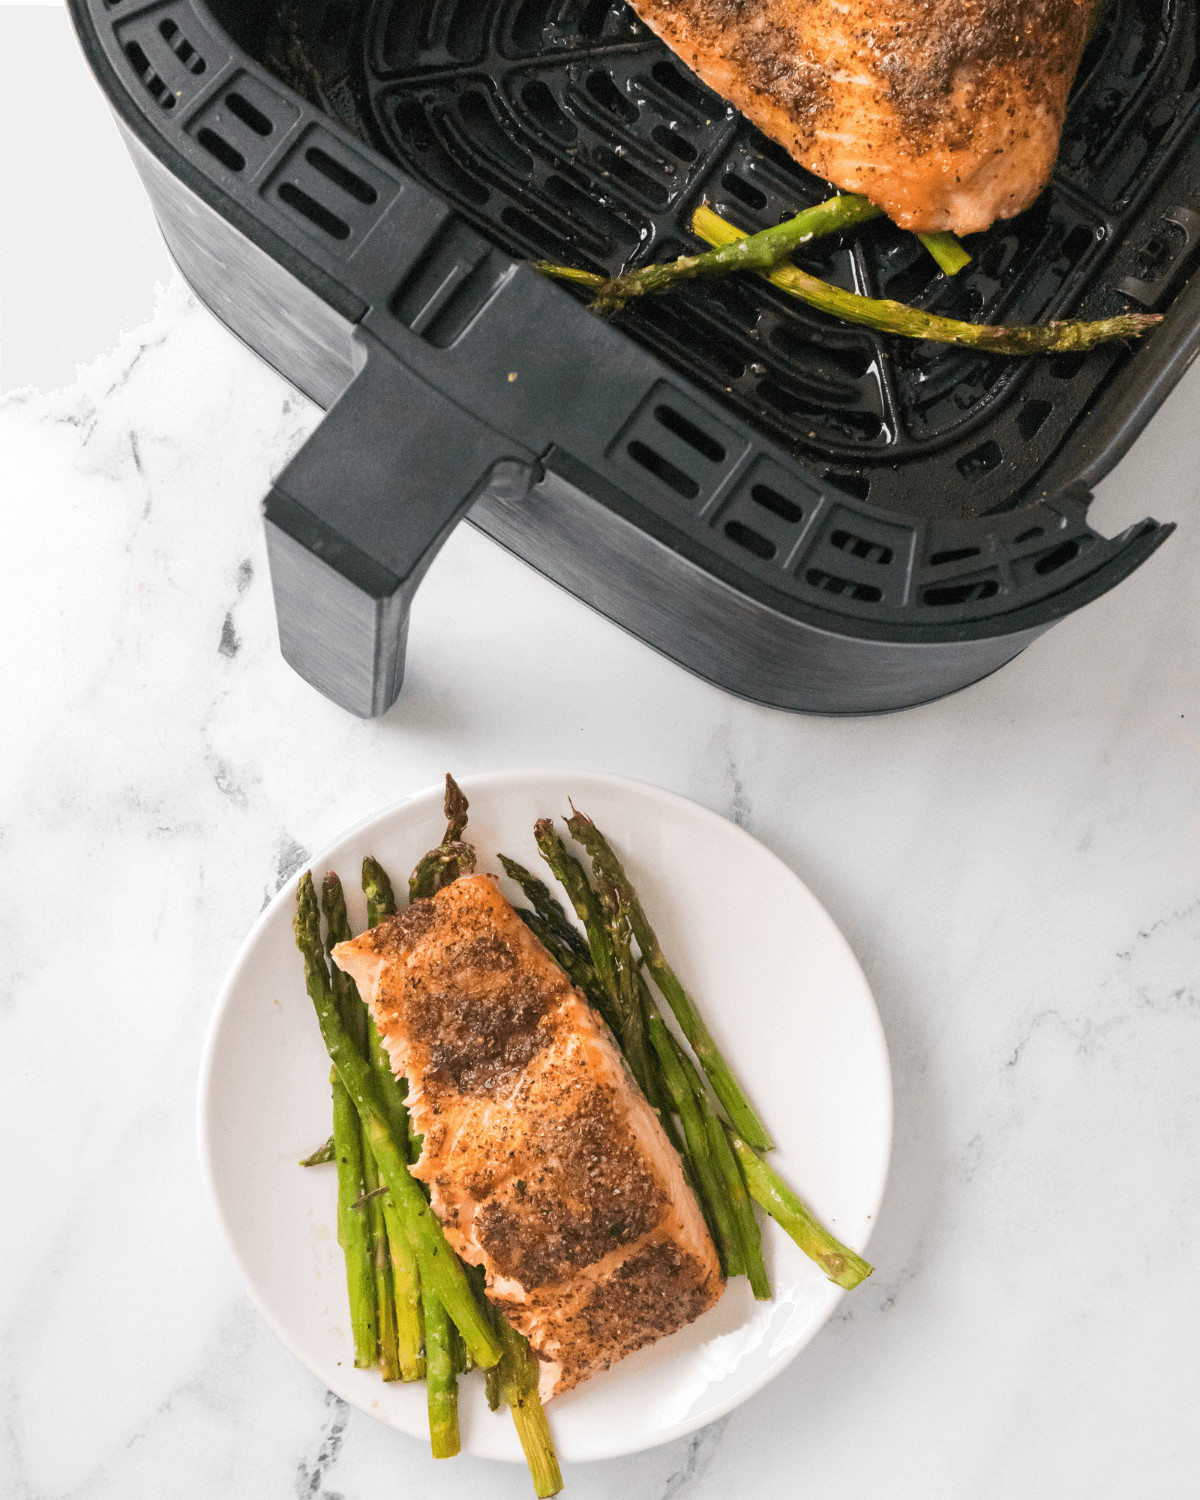 The air fryer salmon and asparagus dish.